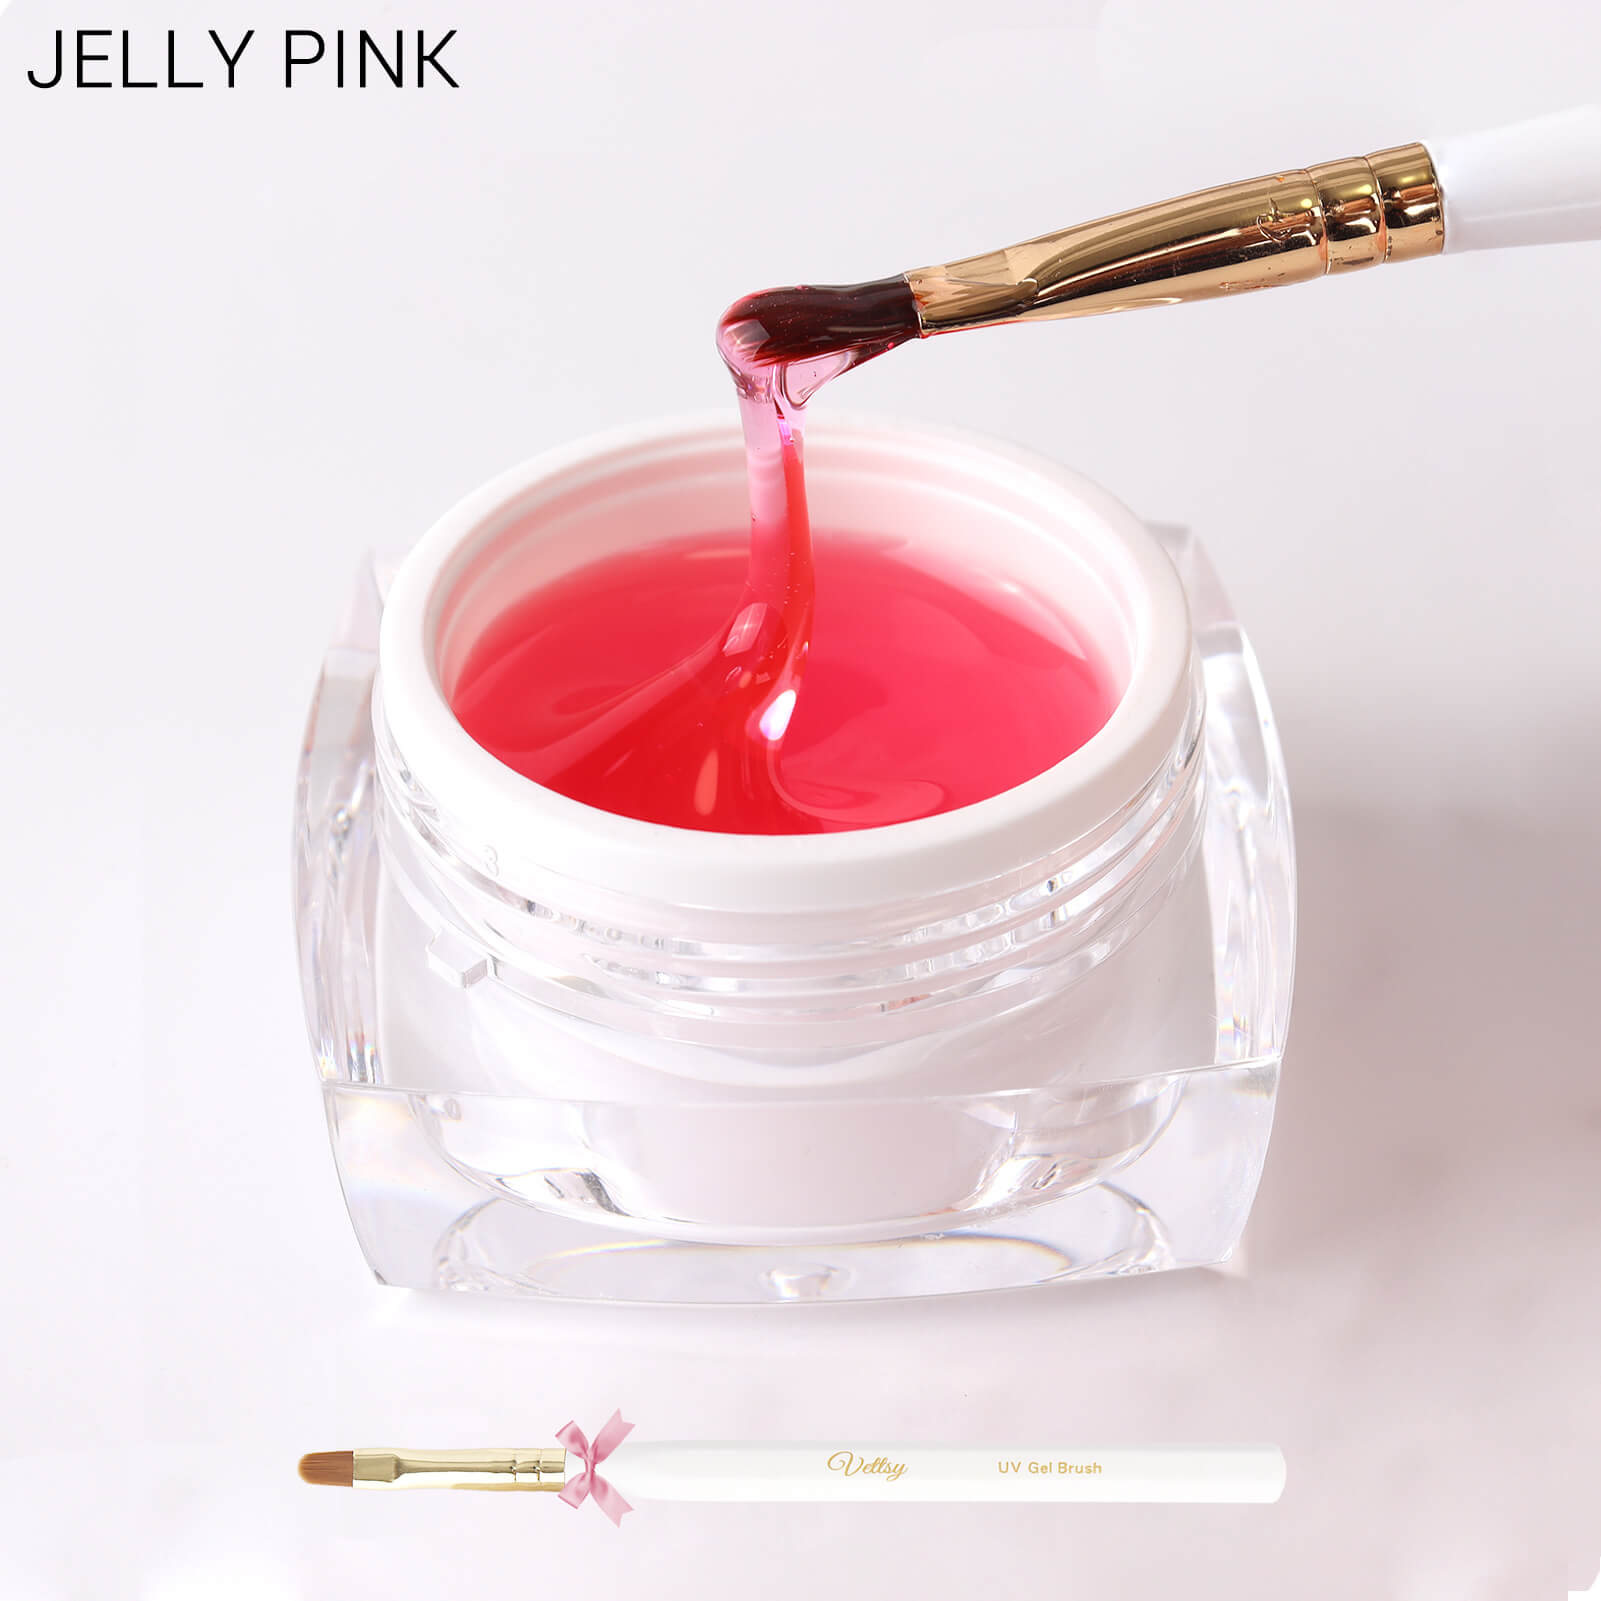 vettsy-fast-uv-builder-gel-nail-strengthen-gel-jelly-pink